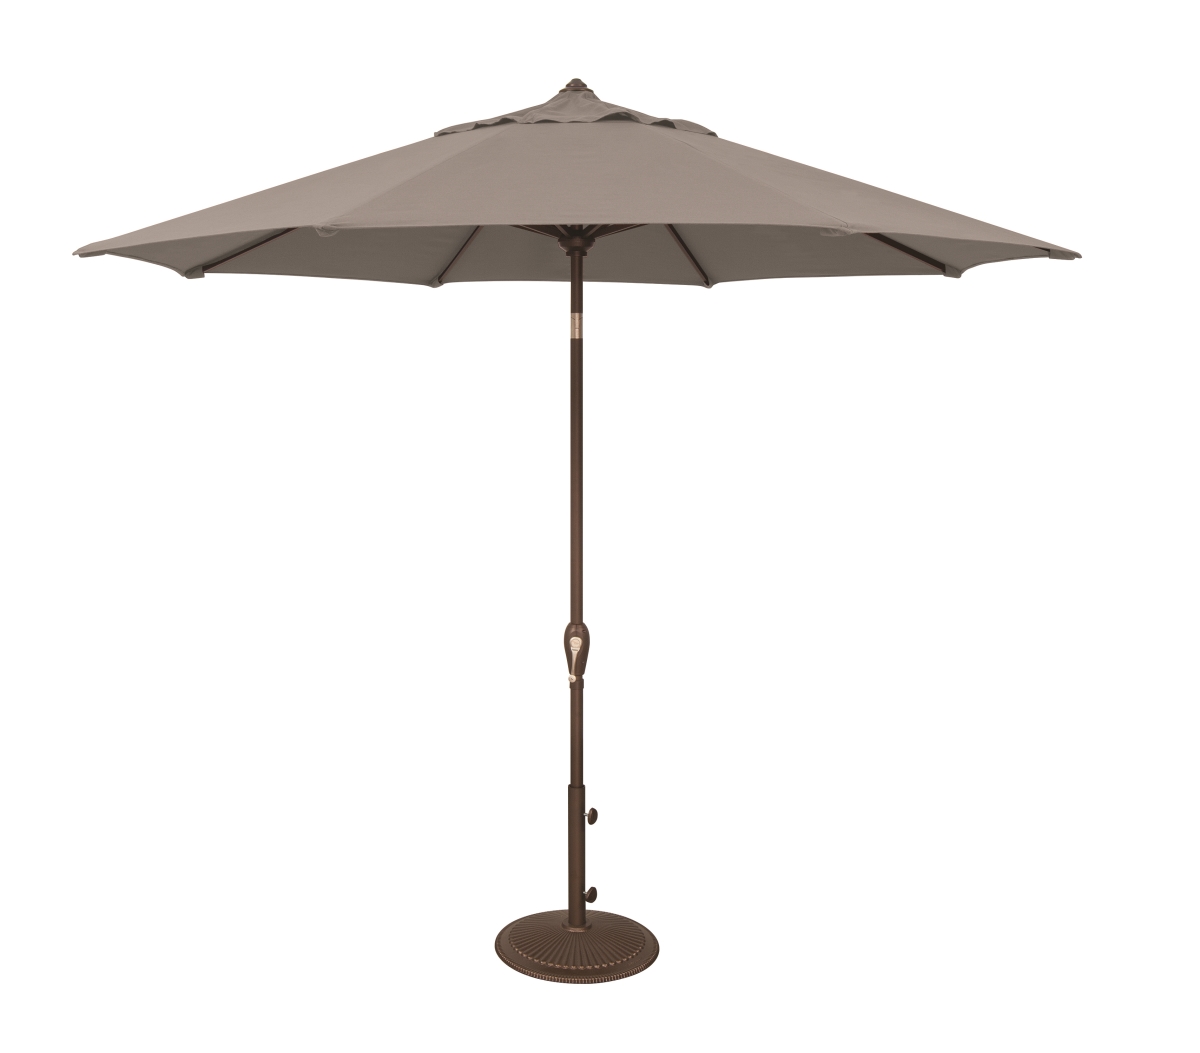 Simplyshade Ssum91-0900-a40433 Aruba 9 Ft. Octagon Sunbrella Auto Tilt Umbrella Cast Silver